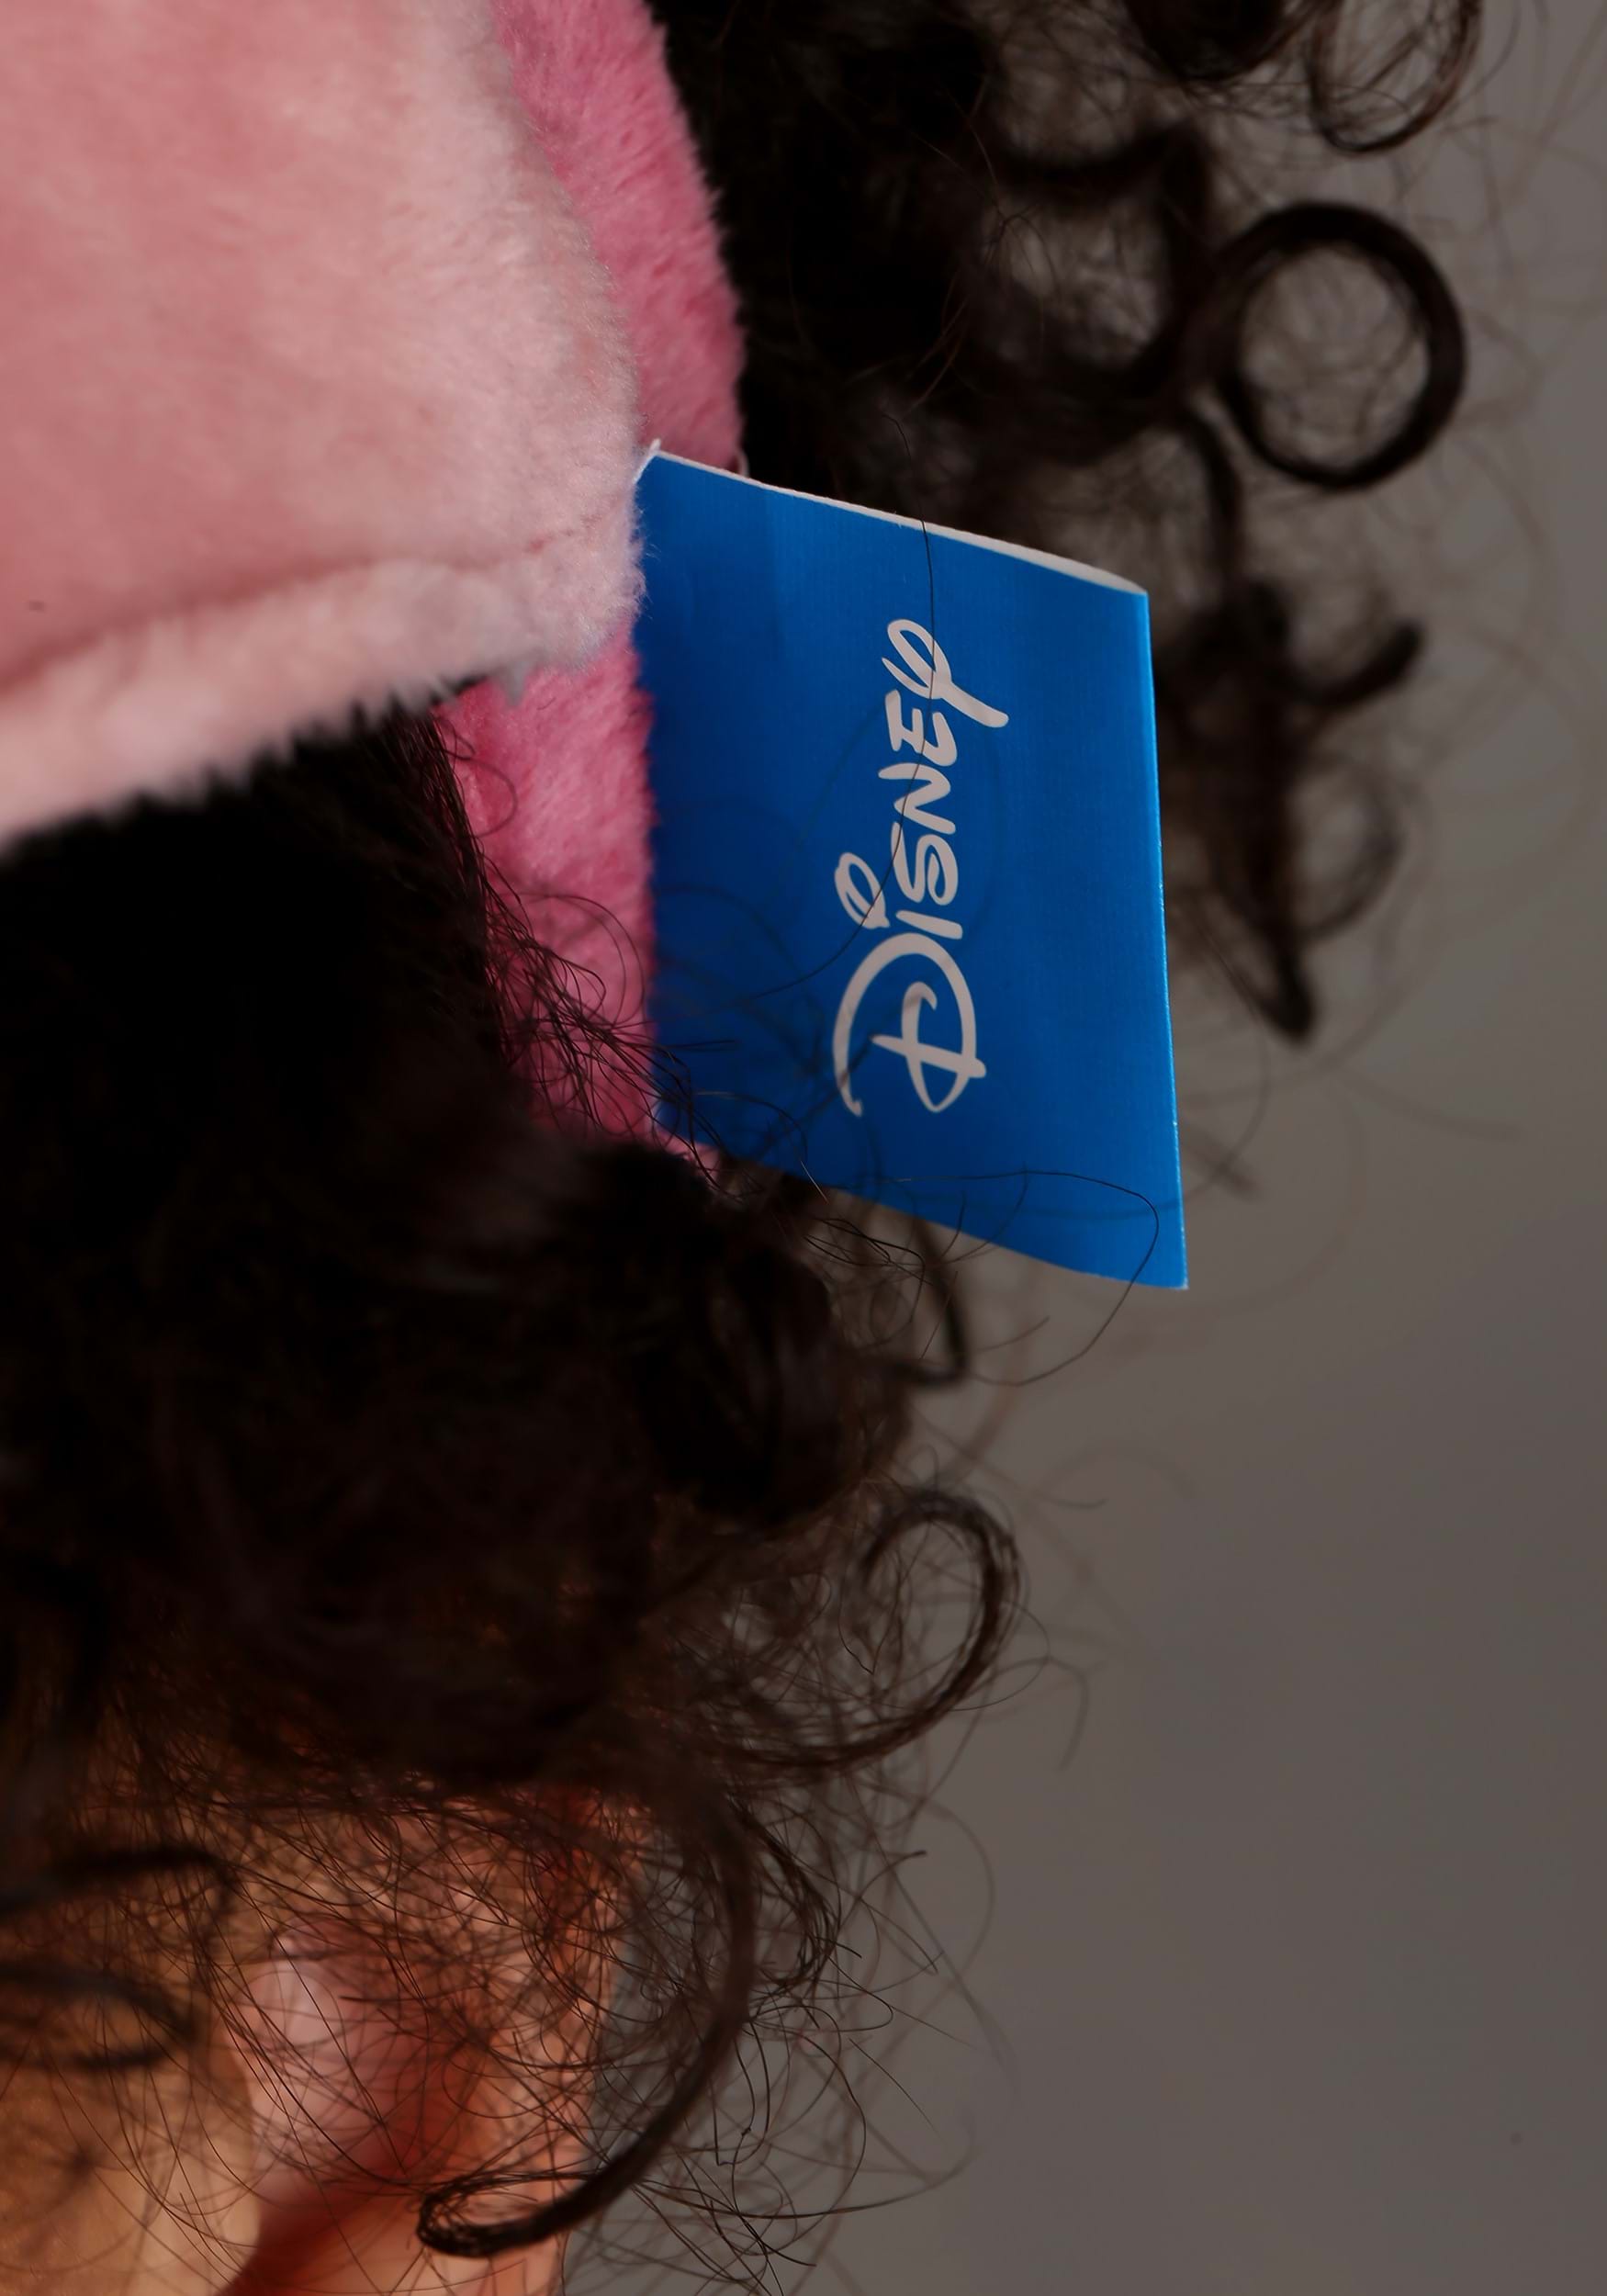 Plush Headband Of Piglet From Winnie The Pooh